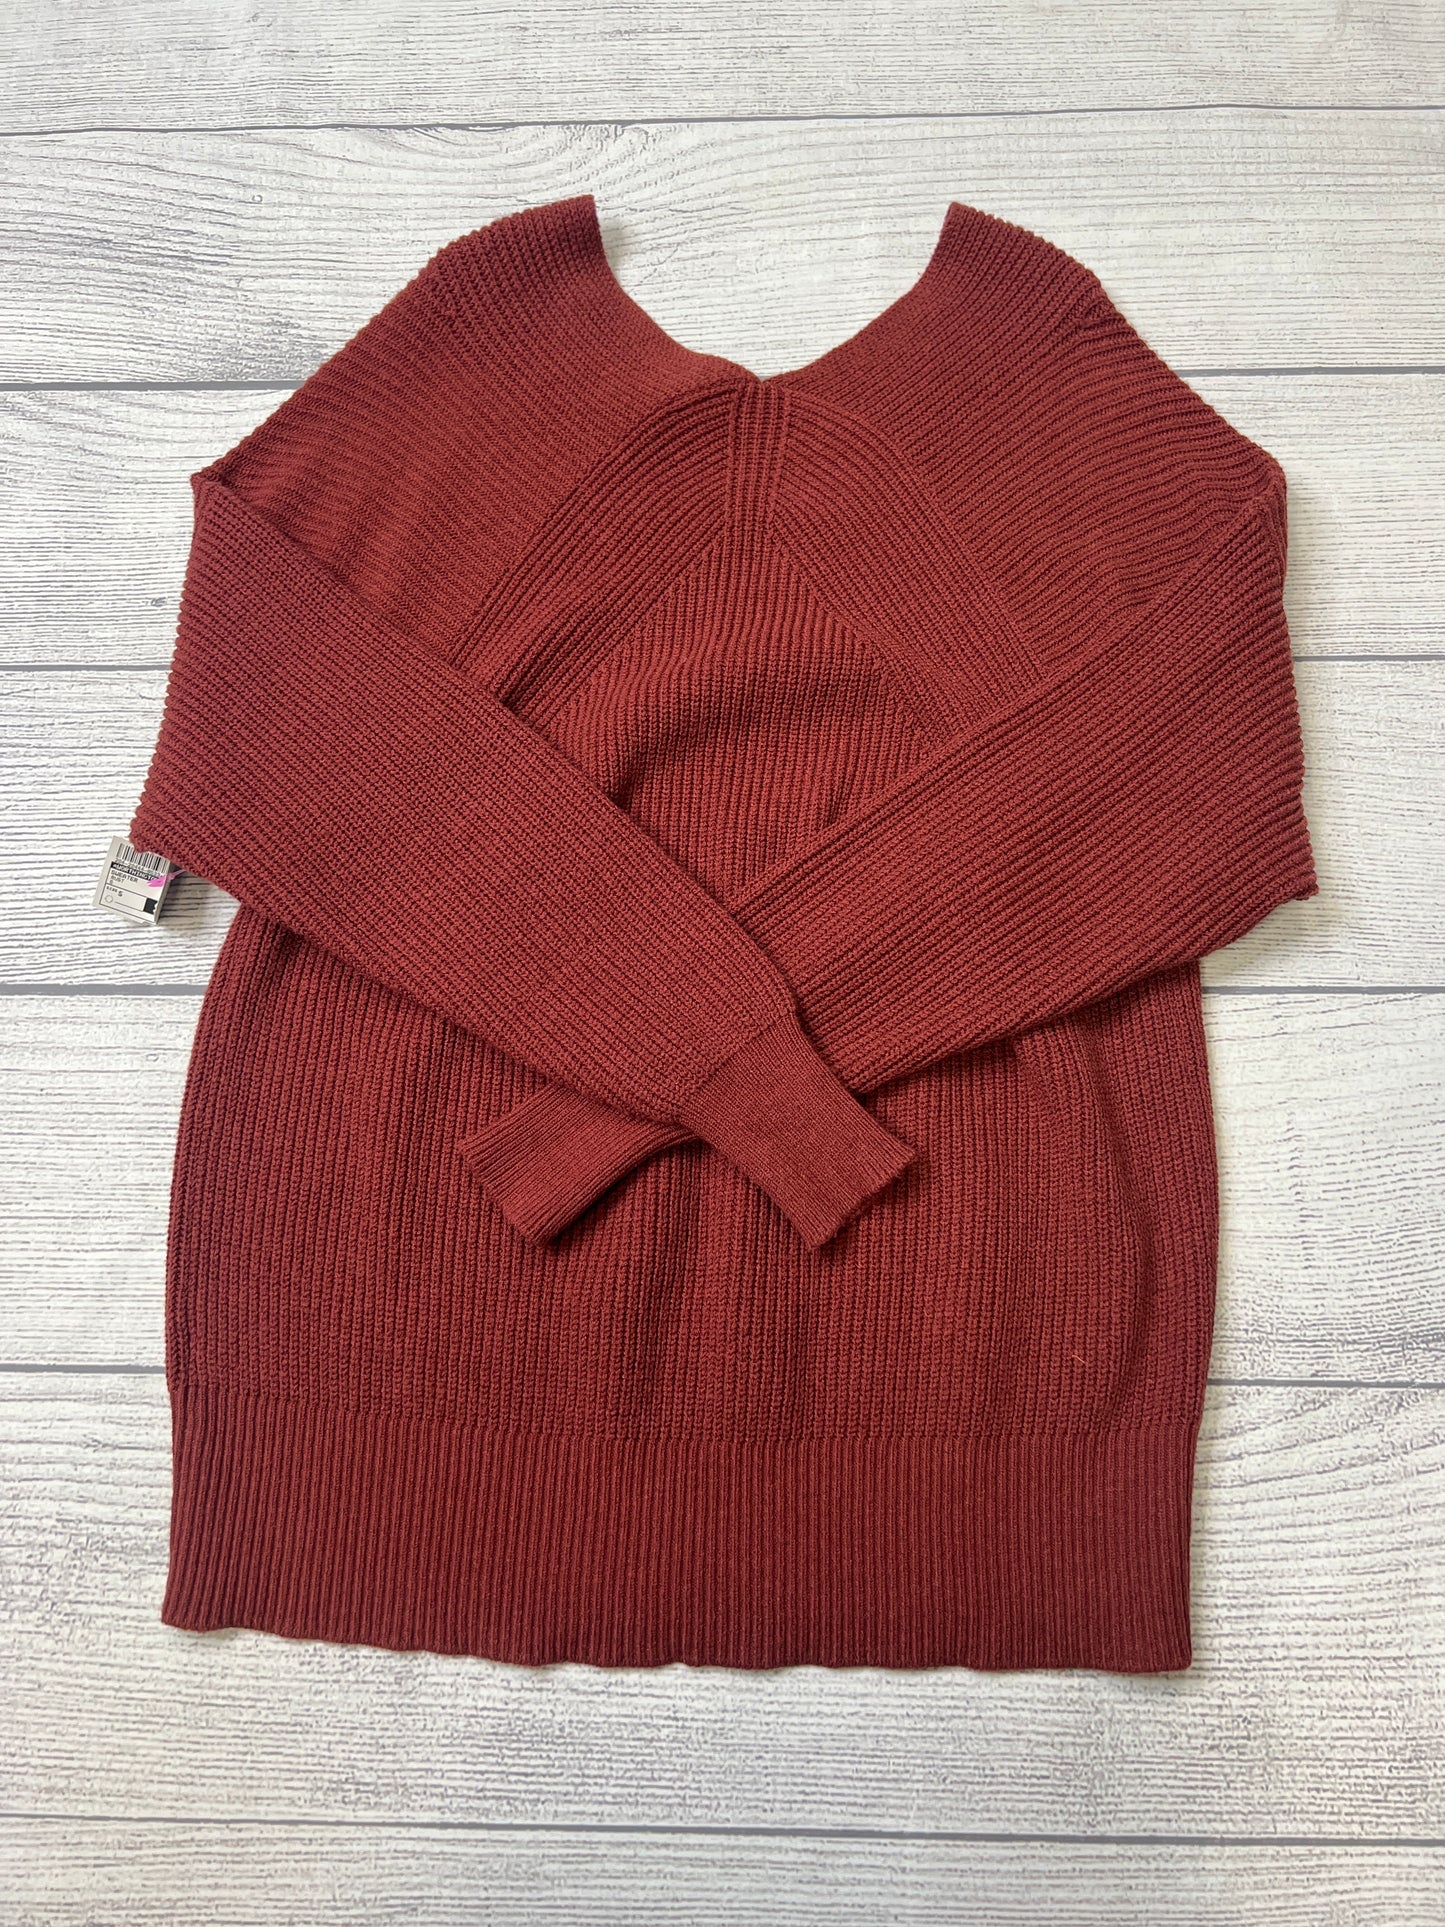 Sweater By Worthington  Size: S